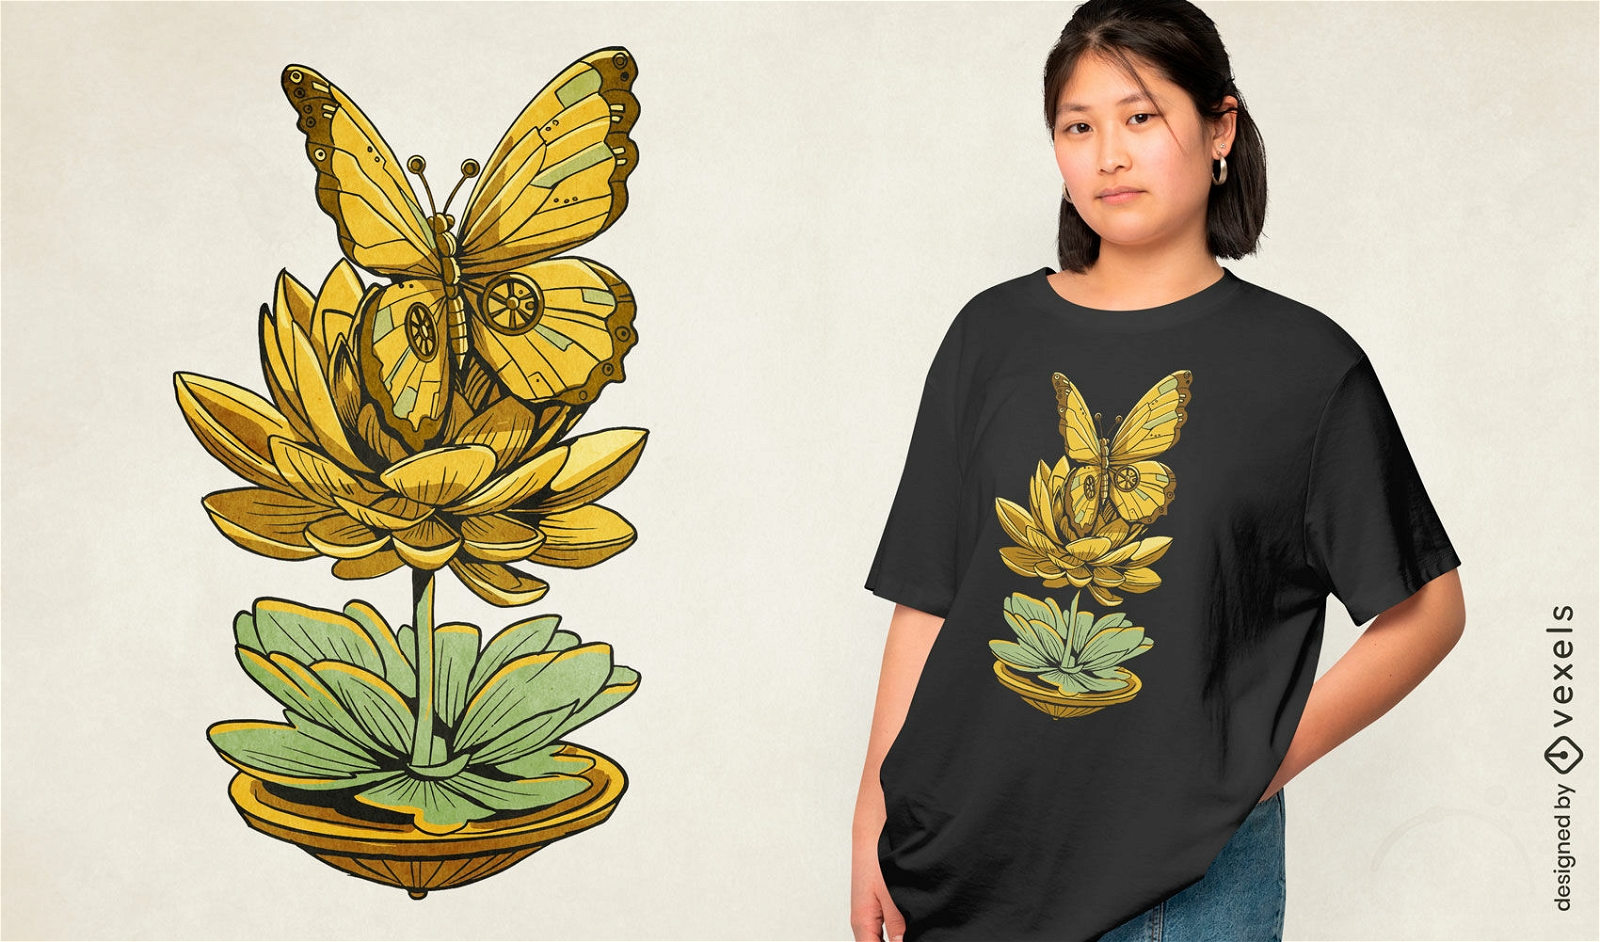 Steampunk-inspiriertes Schmetterlings-T-Shirt-Design